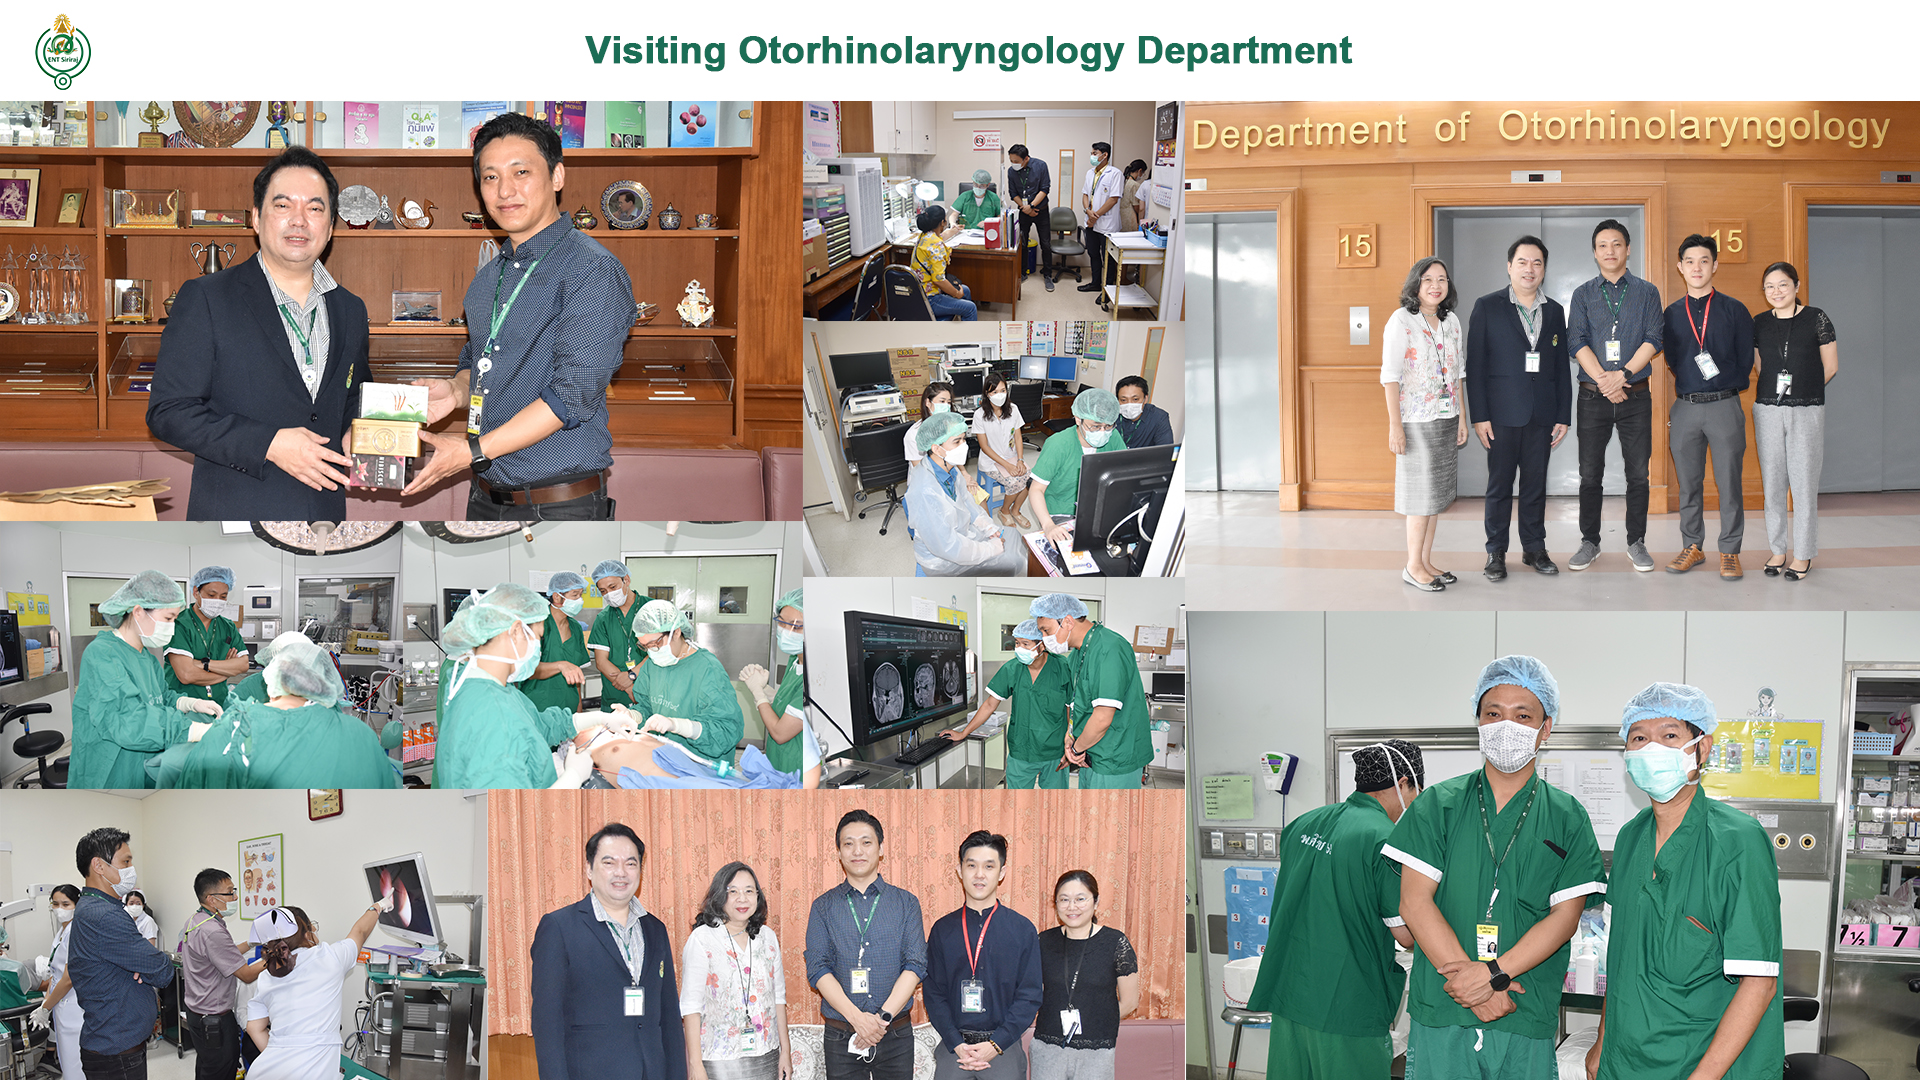 Visiting Otorhinolaryngology Department from JDWNRH, Kingdom of Bhutan